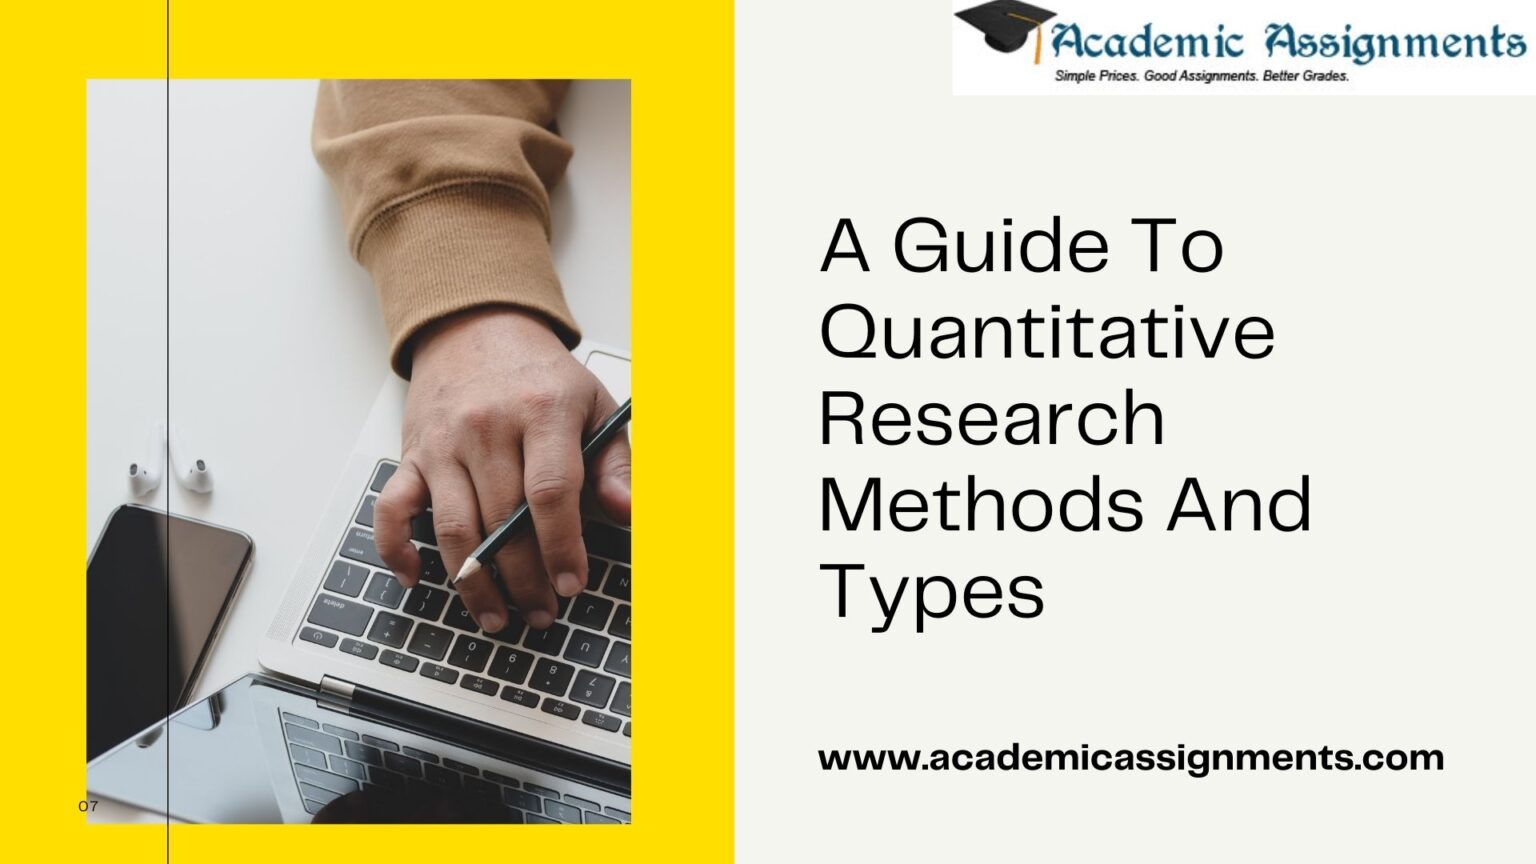 two methods of quantitative research